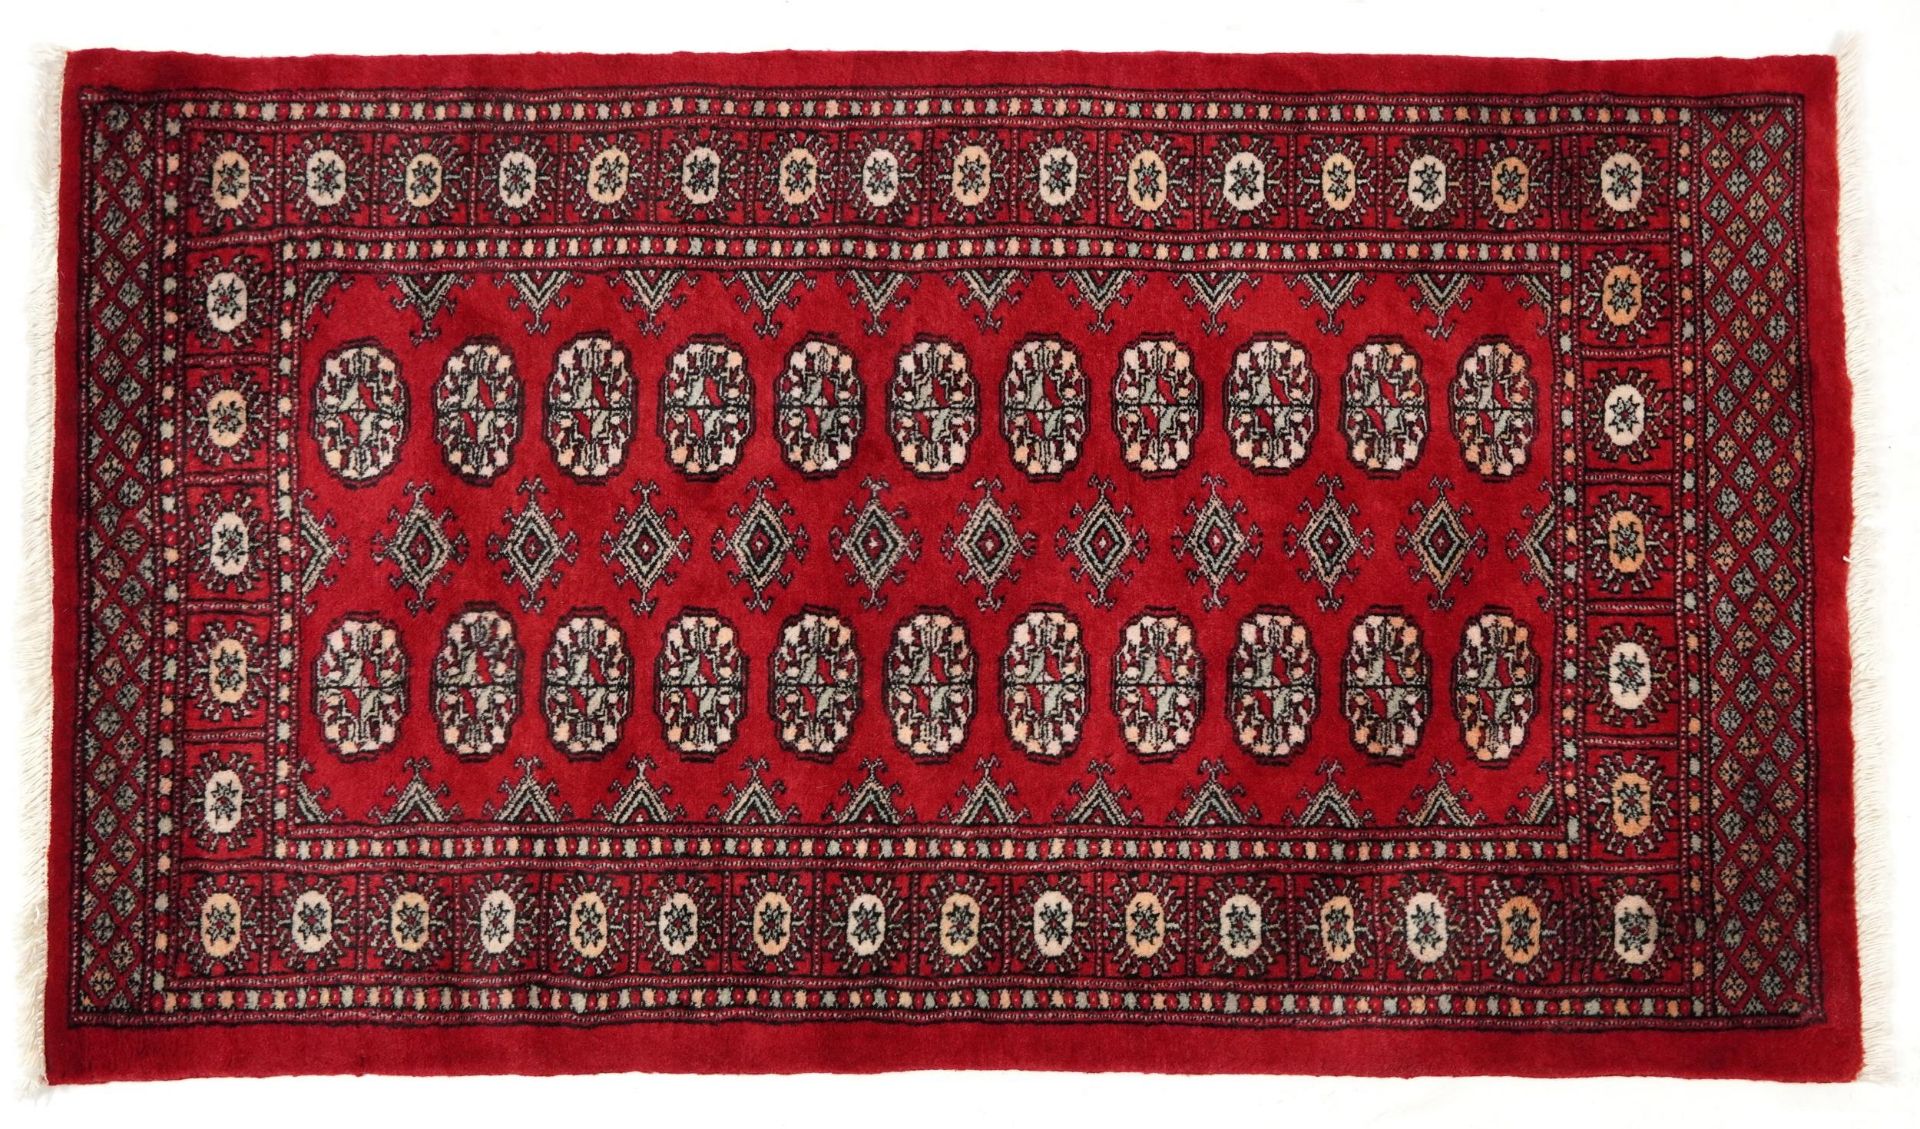 Rectangular Bokhara red ground rug having an all over geometric design, 154cm x 96cm